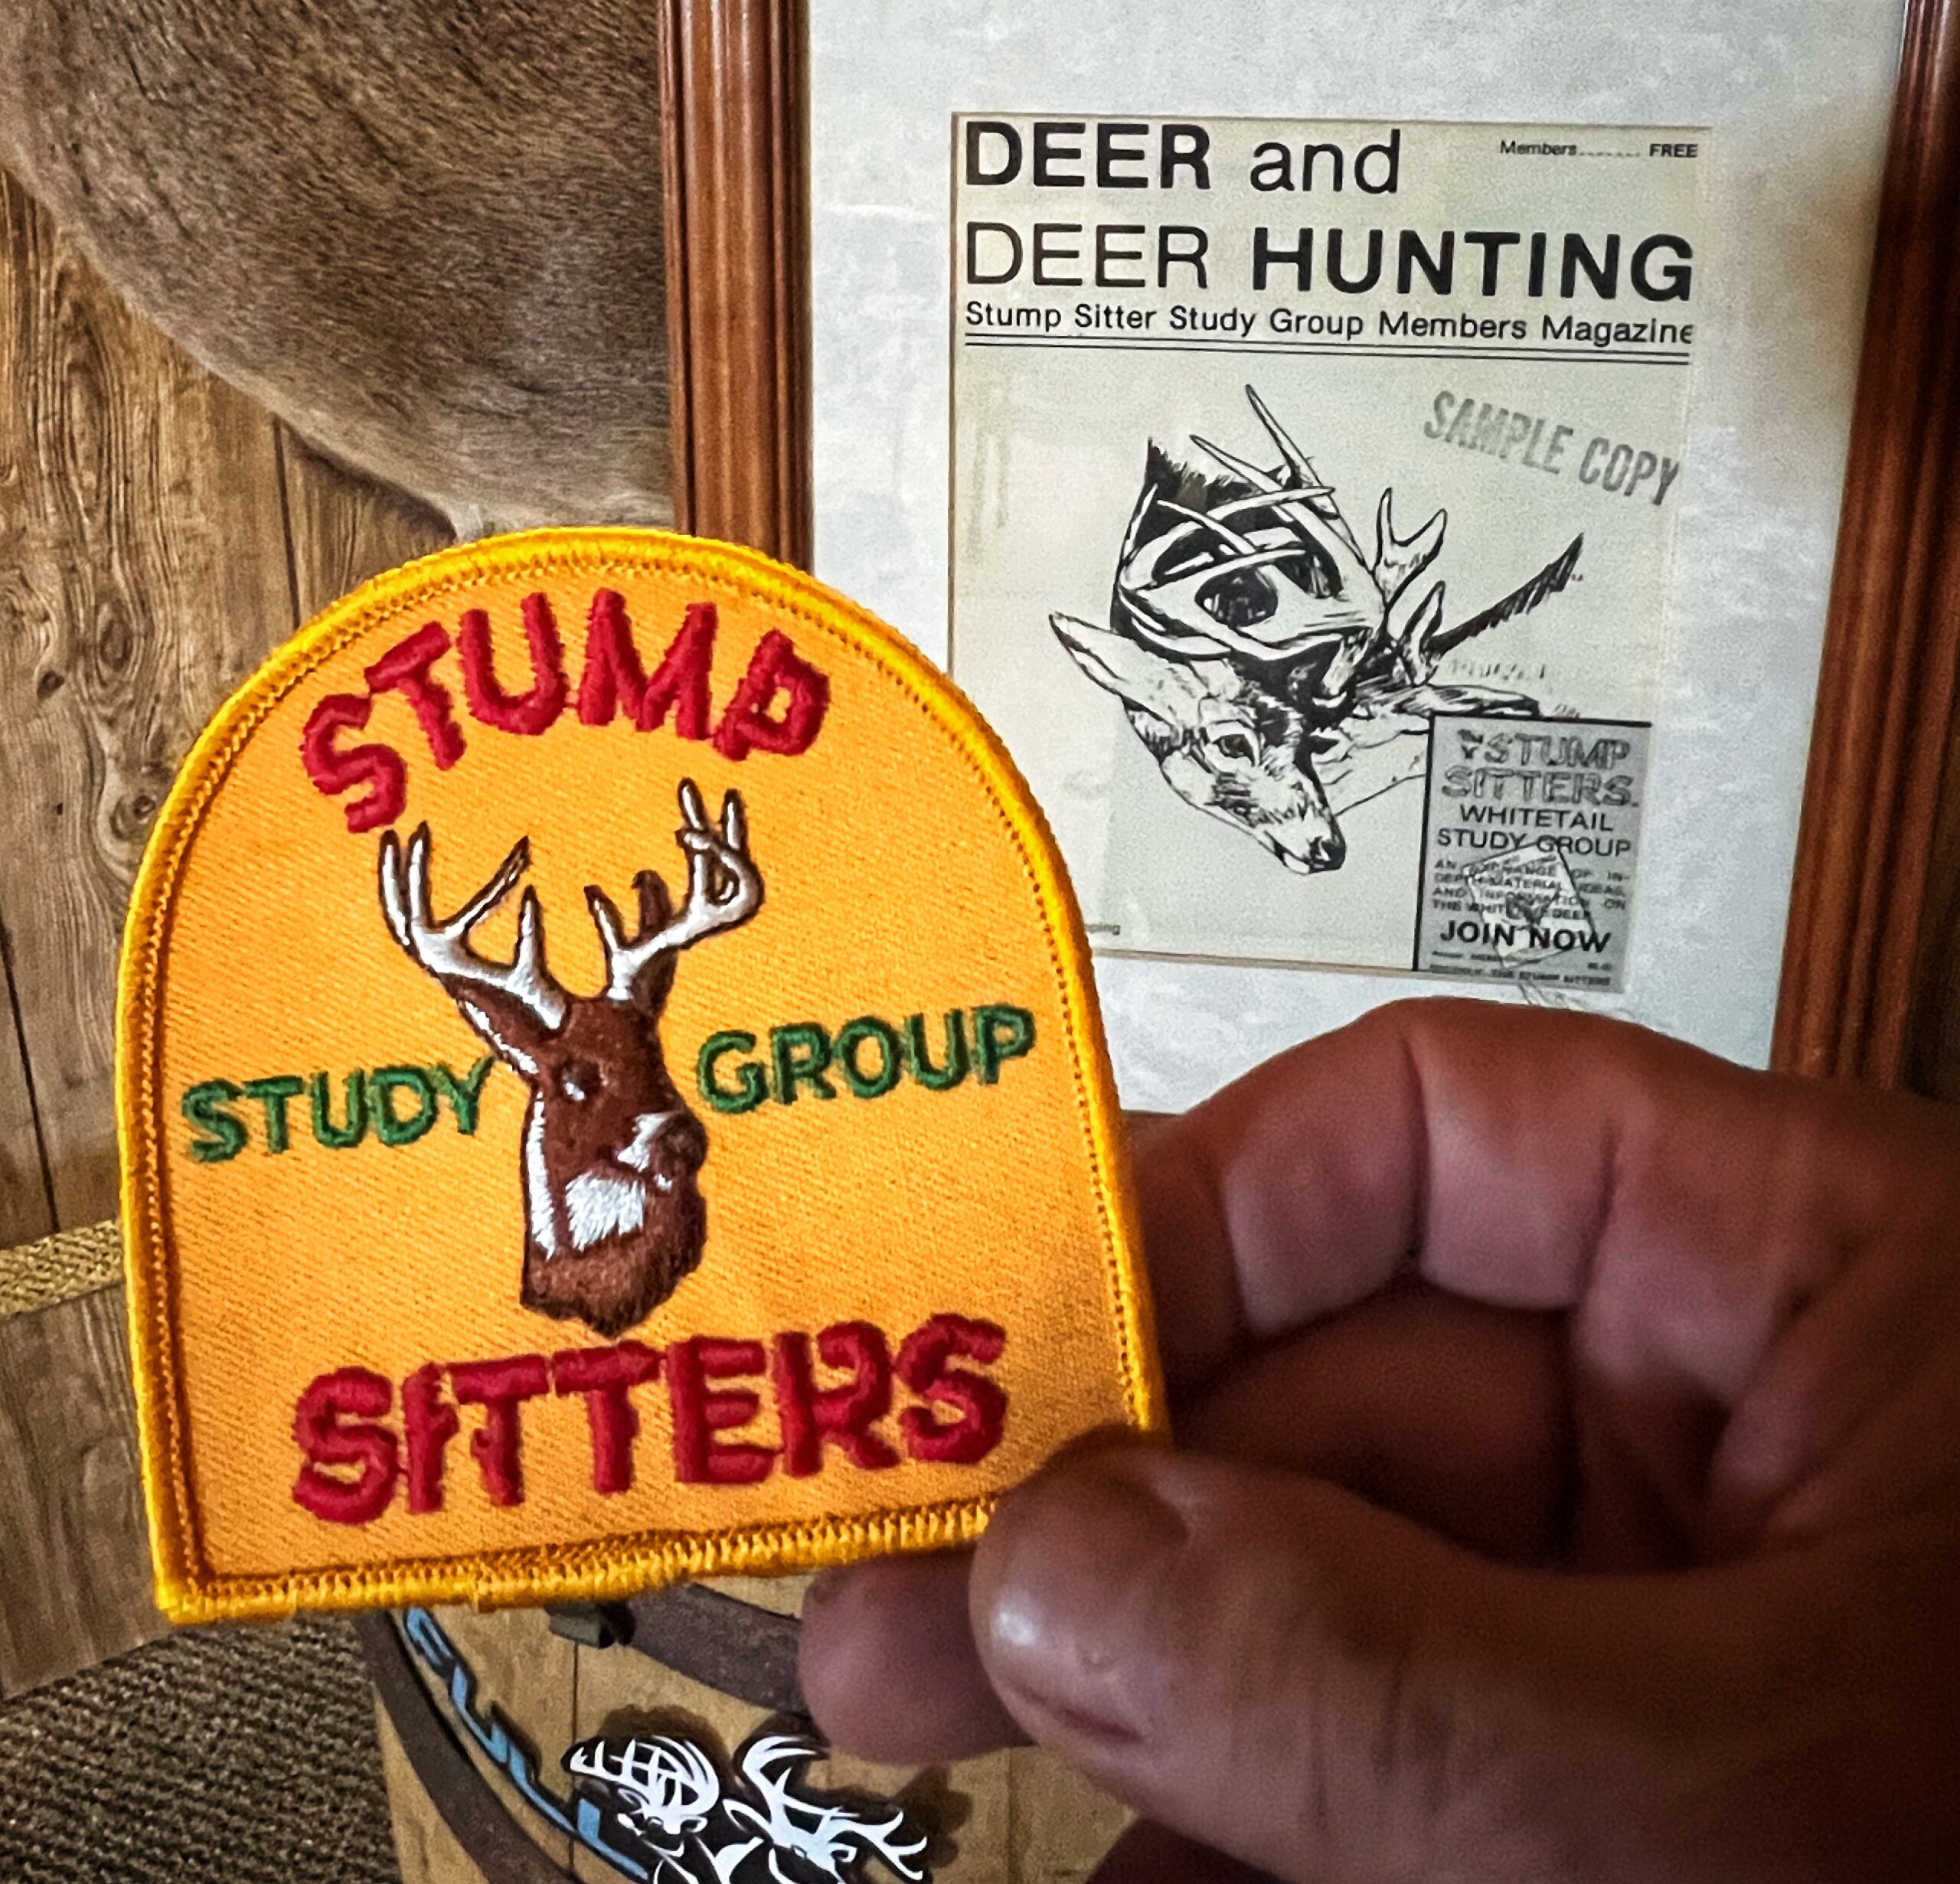 50 Years of the Original Stump Sitters!